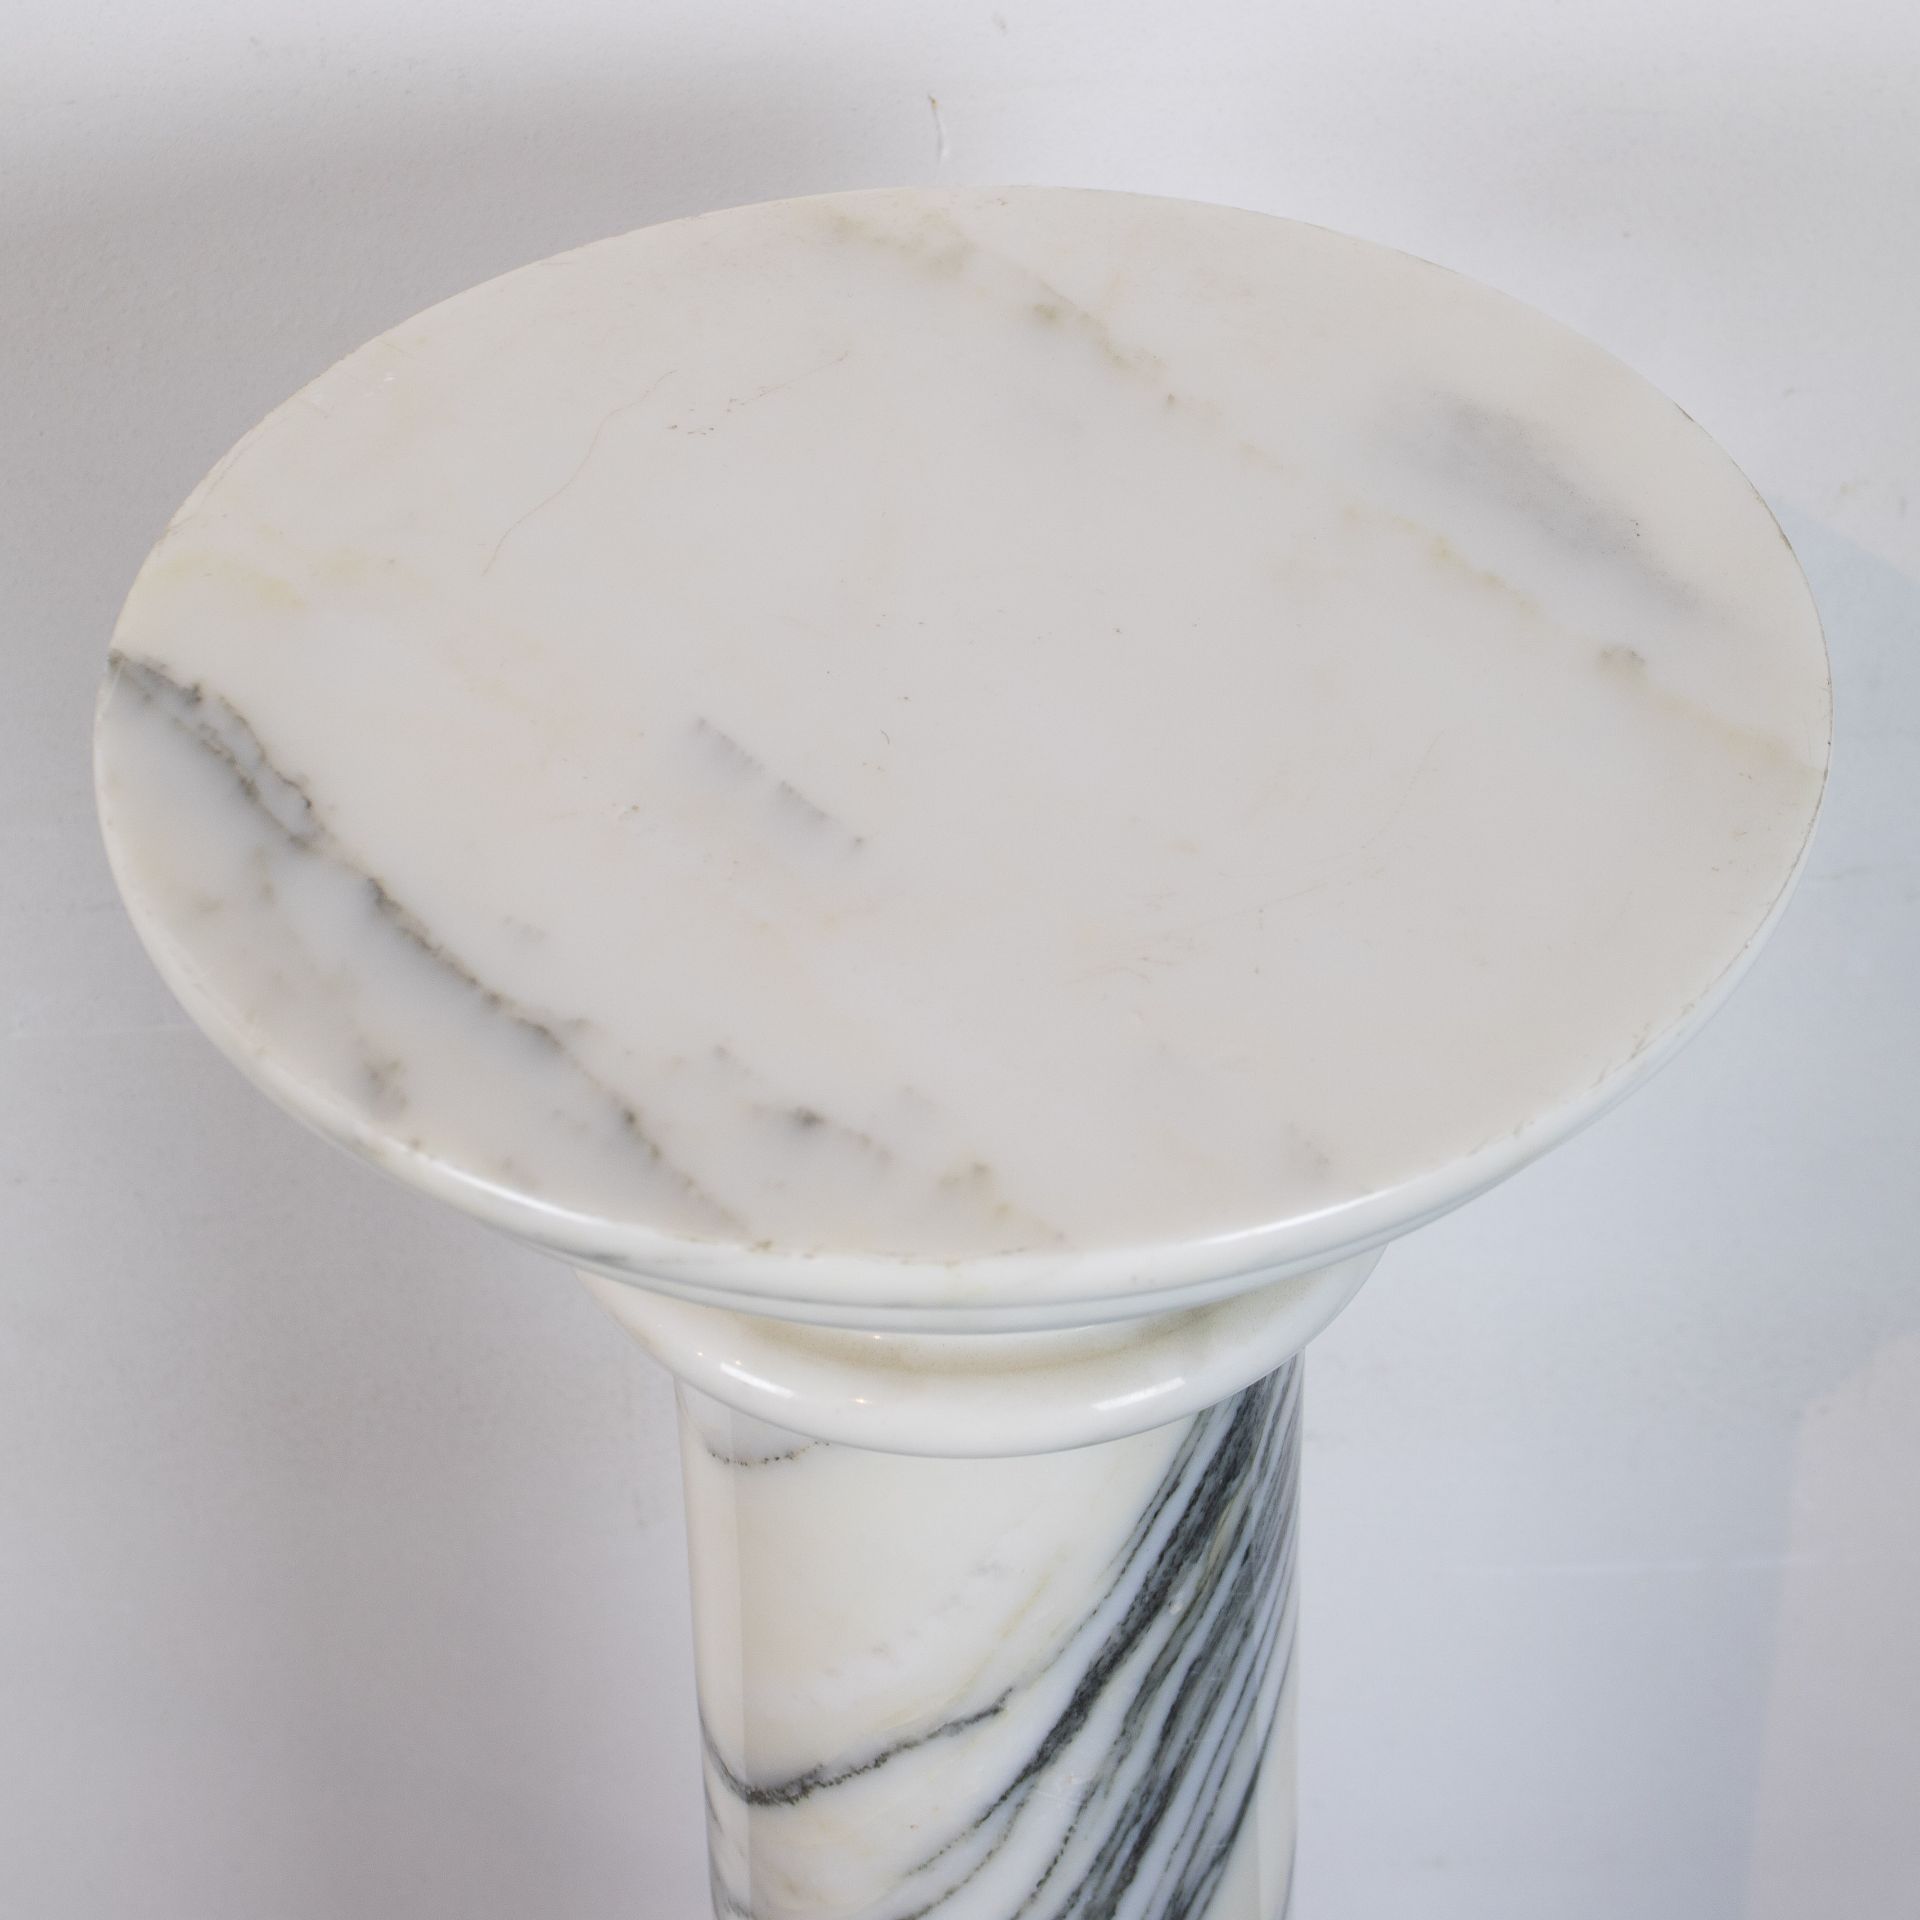 Marble pedestal - Image 2 of 2